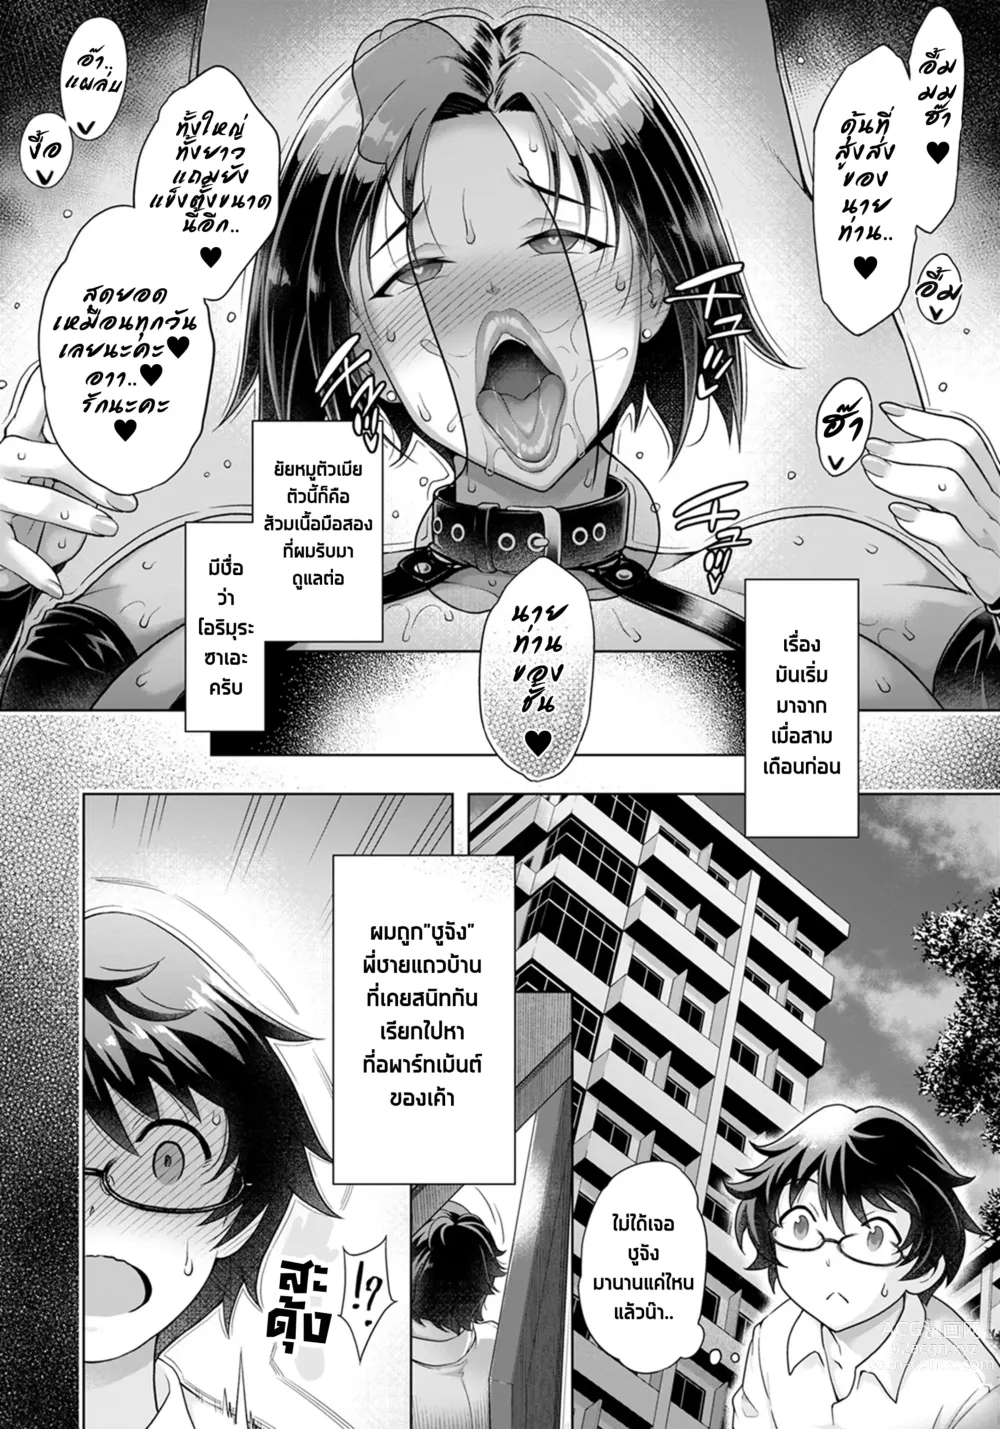 Page 2 of manga ส้วมเนื้อที่มีความสุขที่สุดในโลก